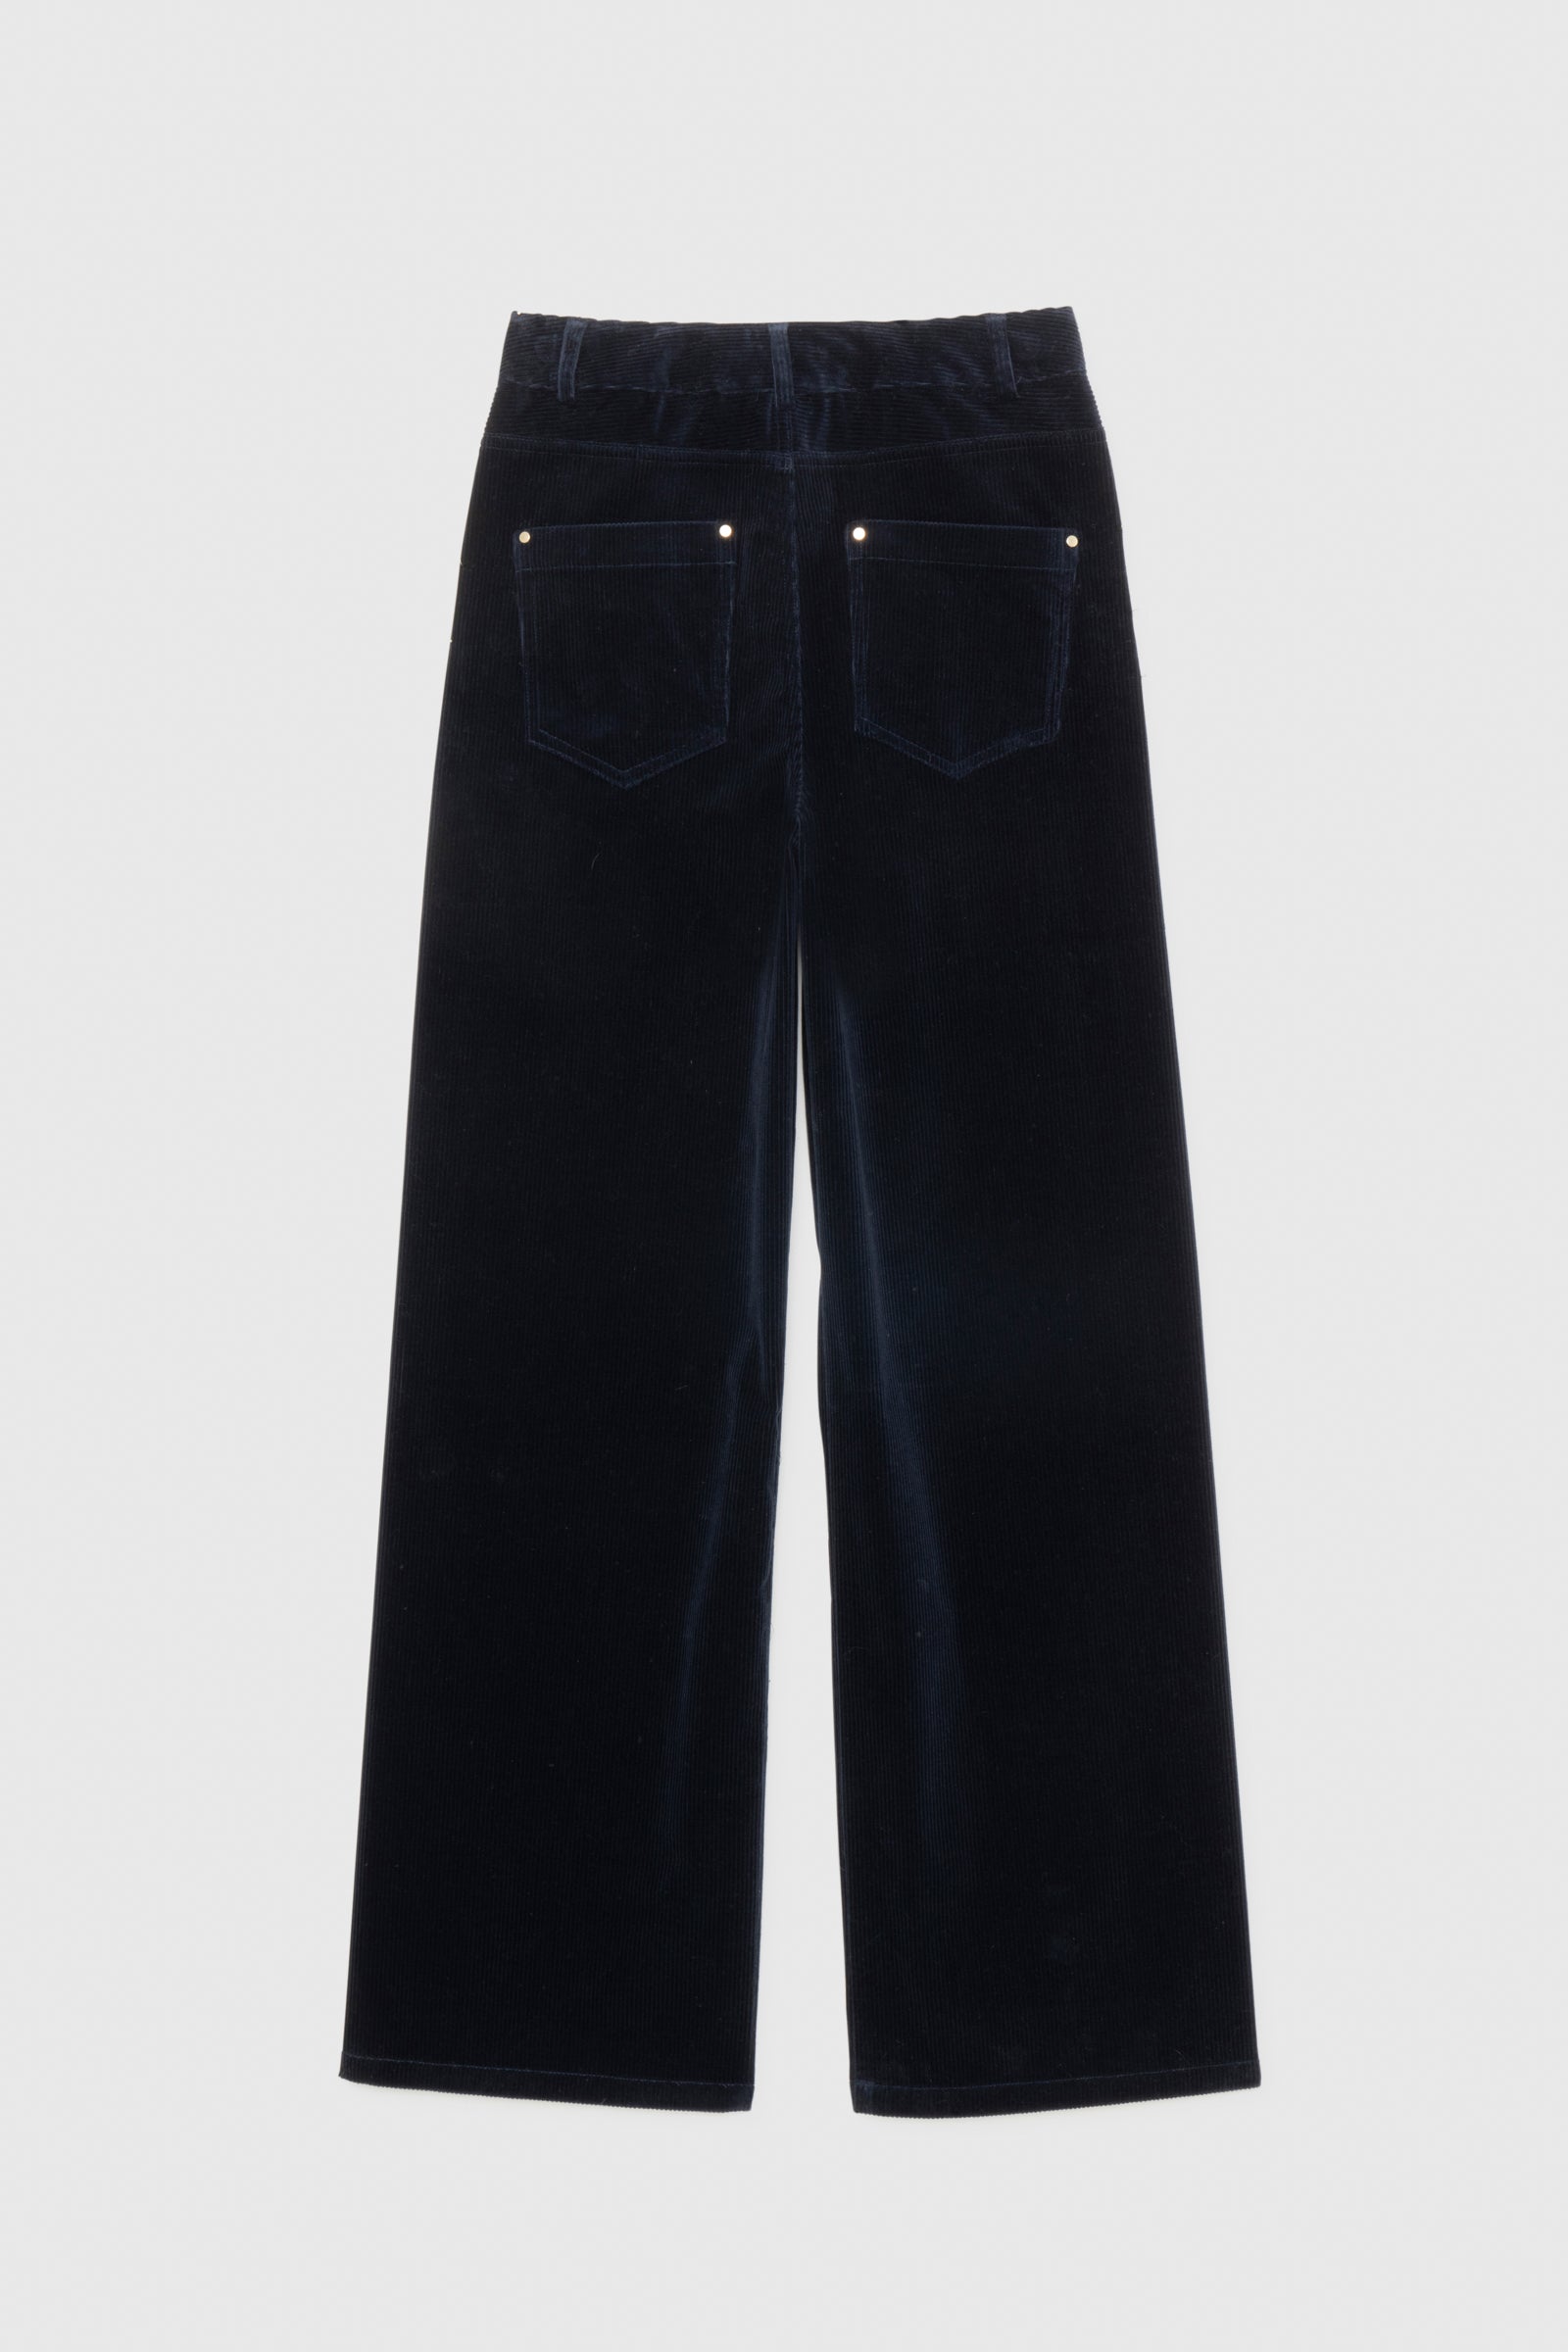 Pantalon BASILIA bleu marine Coton Elasthanne haut de gamme femme MAX&MOI